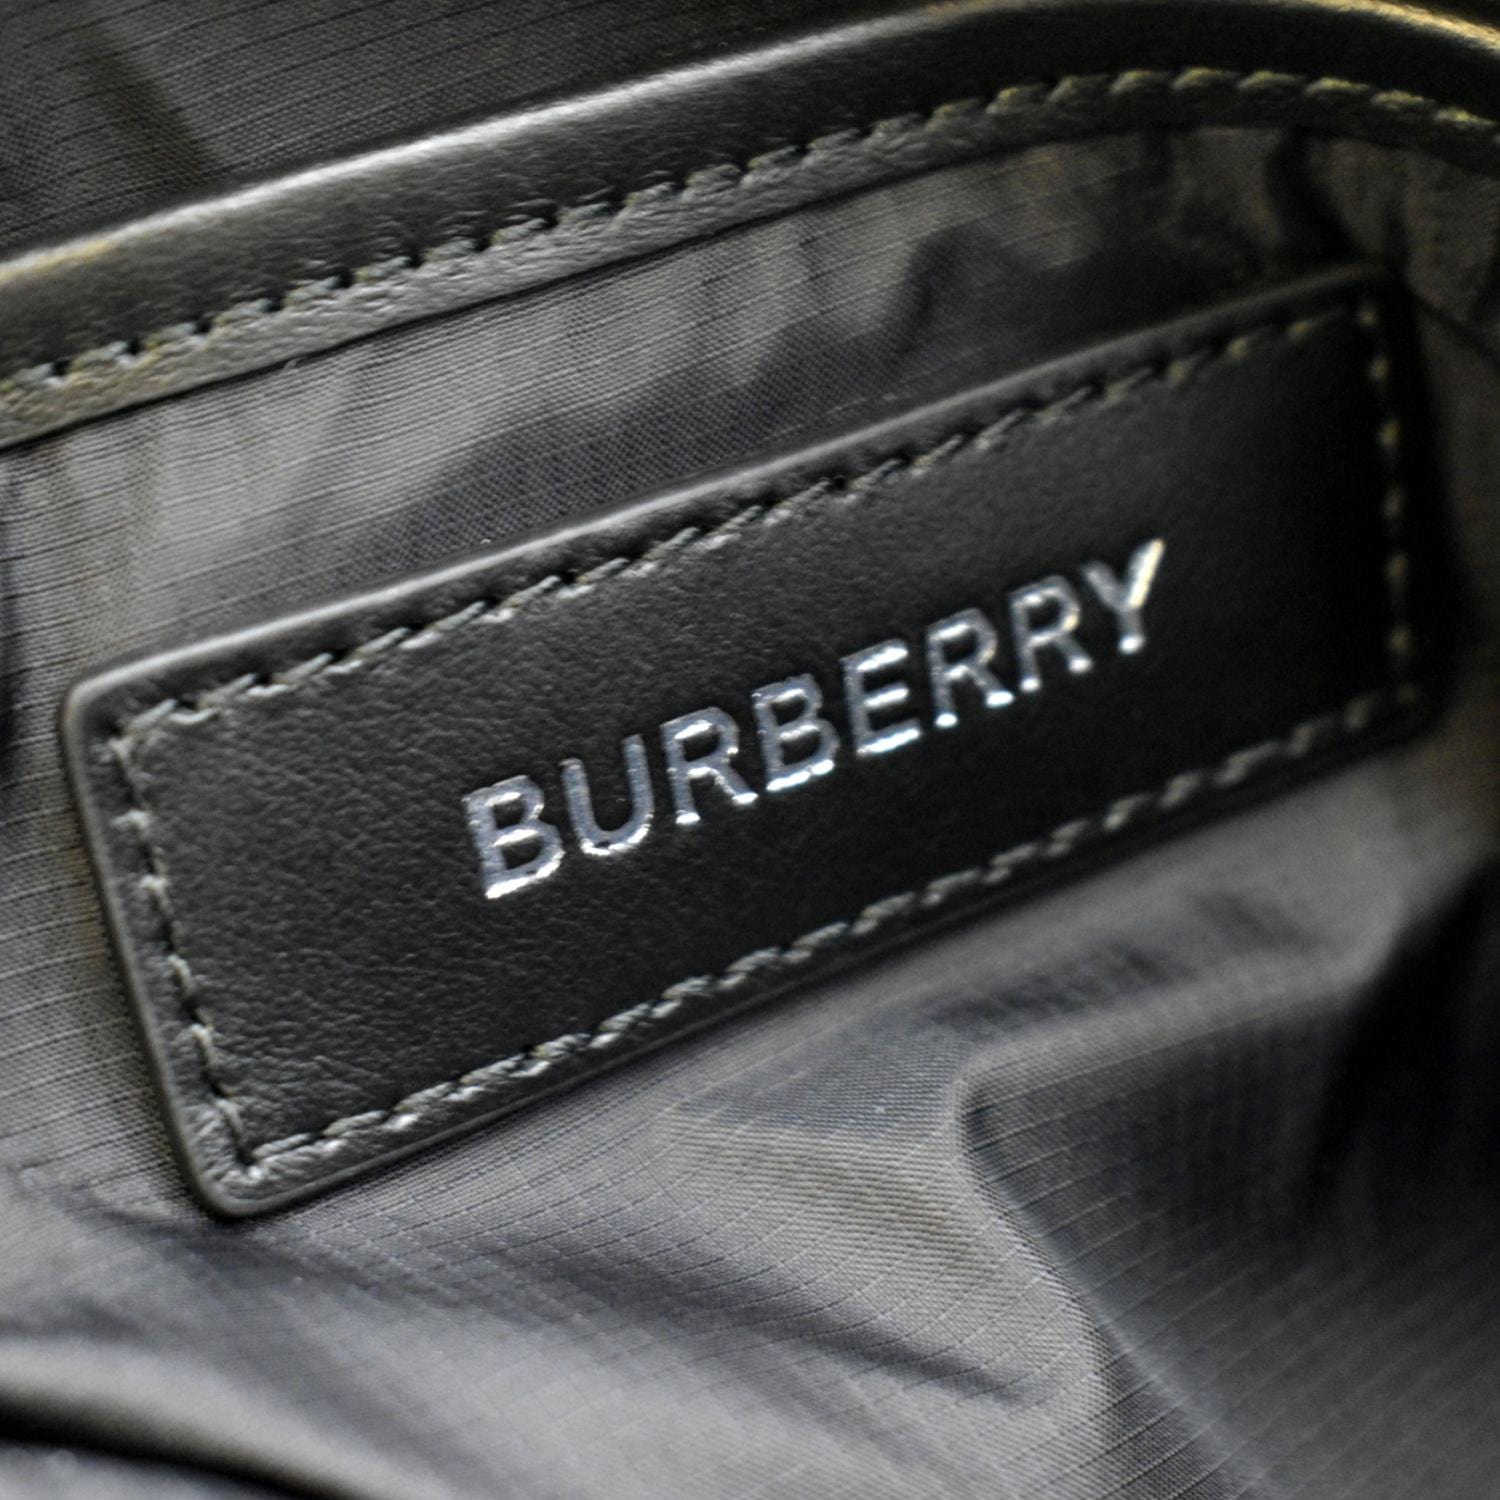 burberry london bag